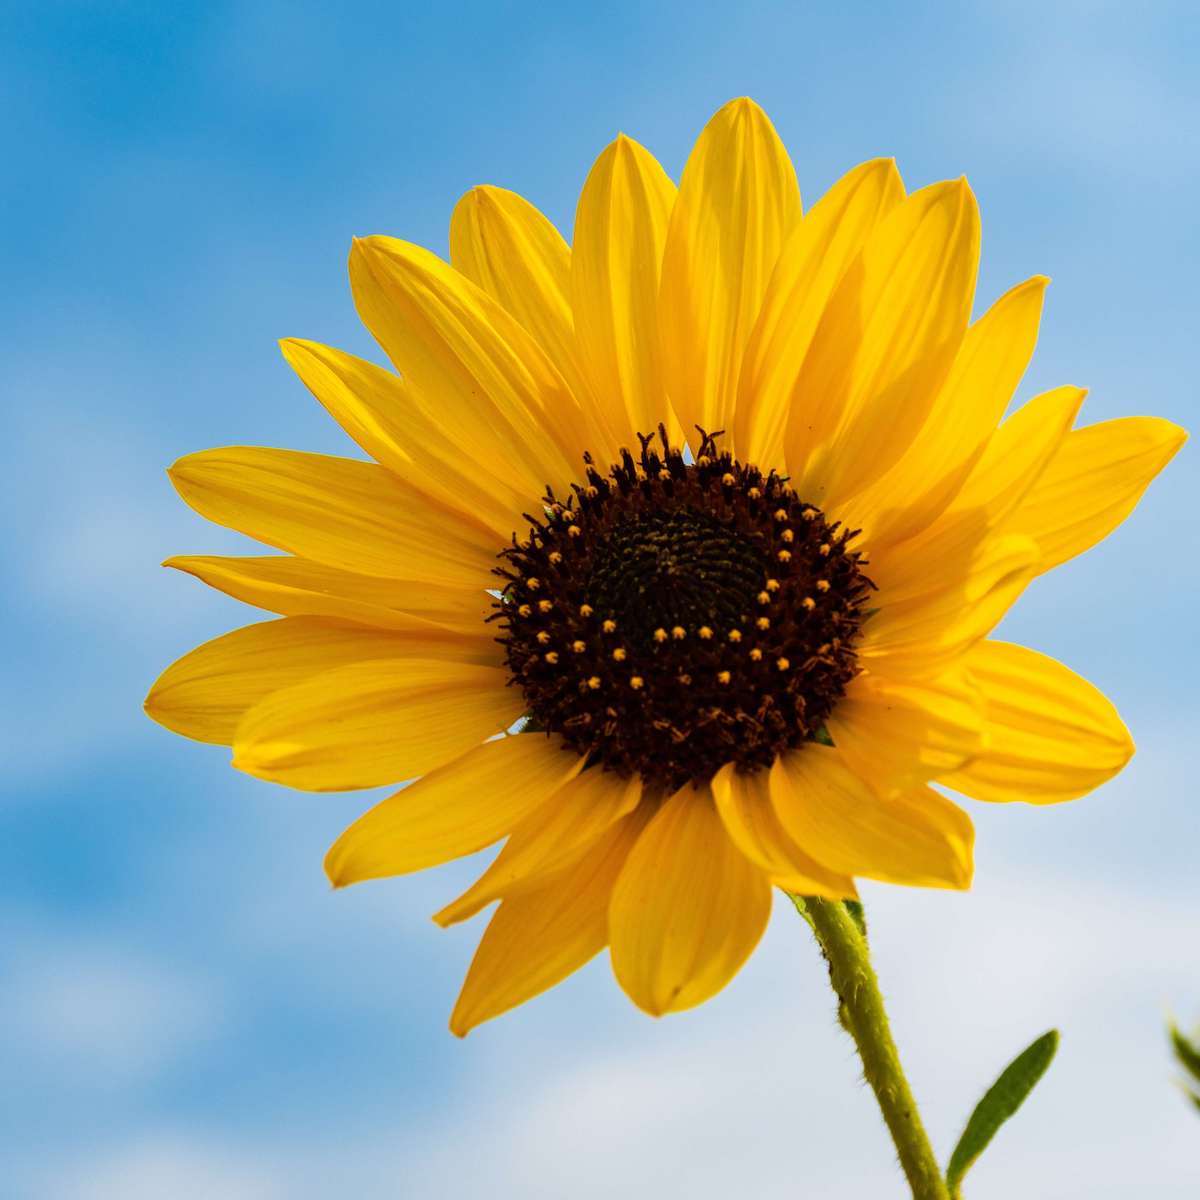 Sunflower, Photo by Brett Sayles from Pexels